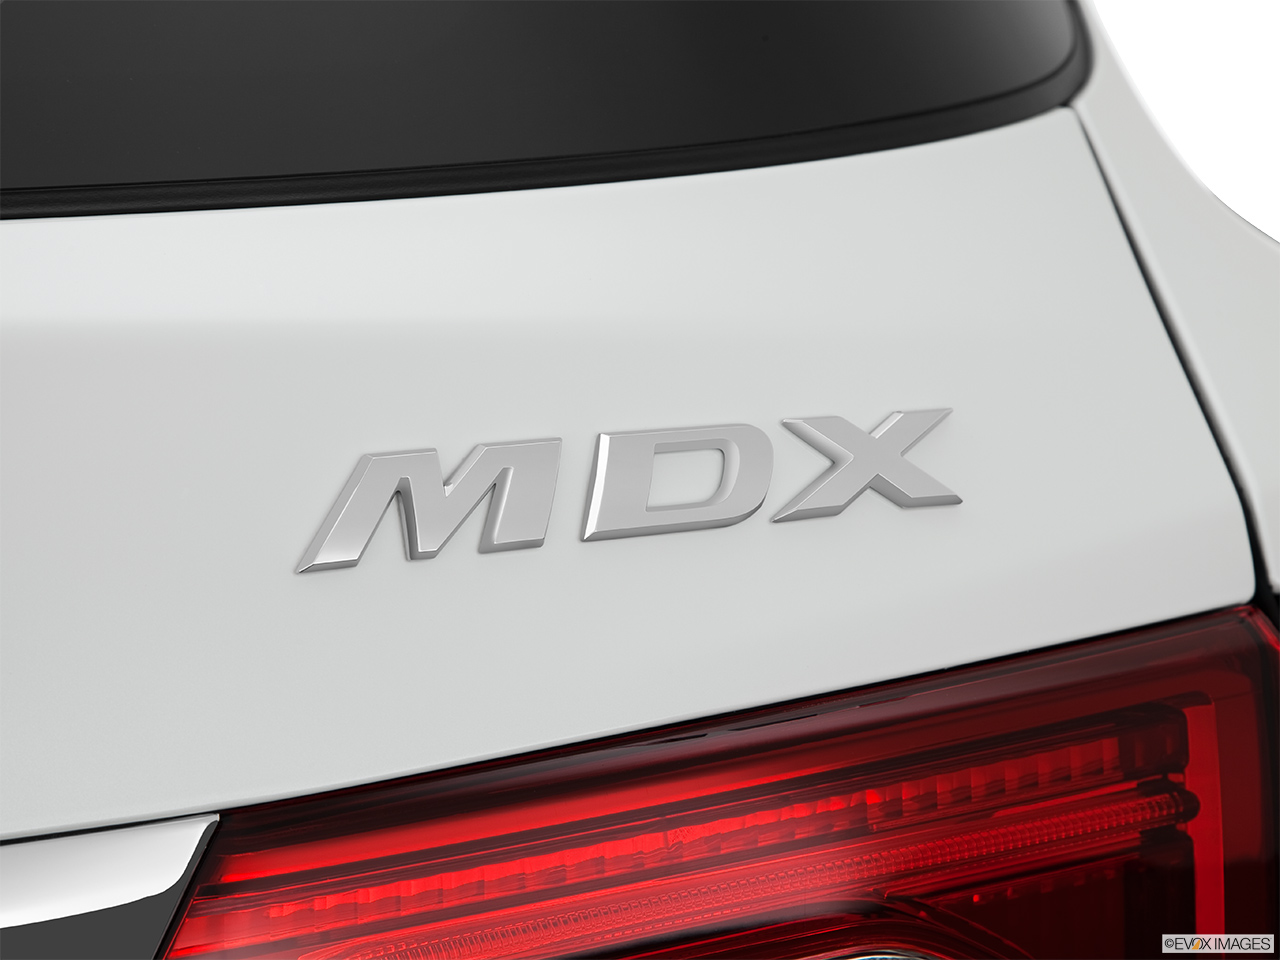 2014 Acura MDX SH-AWD Rear model badge/emblem 